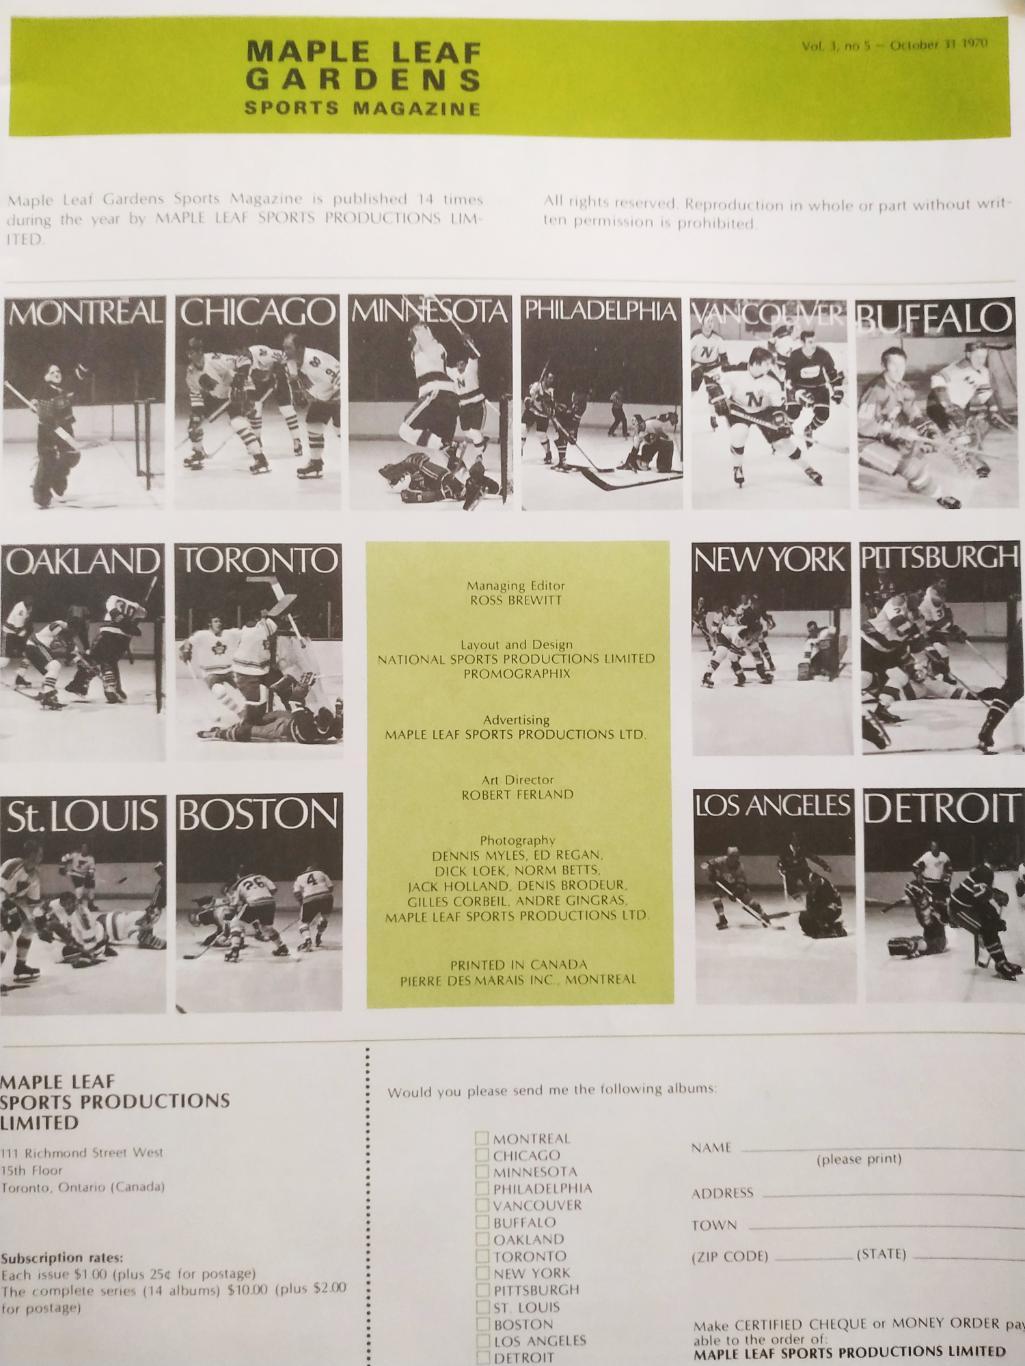 ХОККЕЙ ПРОГРАММА АЛЬБОМ ВАНКУВЕР НХЛ NHL 1970 OCT.31 VANCOUVER CANUCKS PROGRAM 1